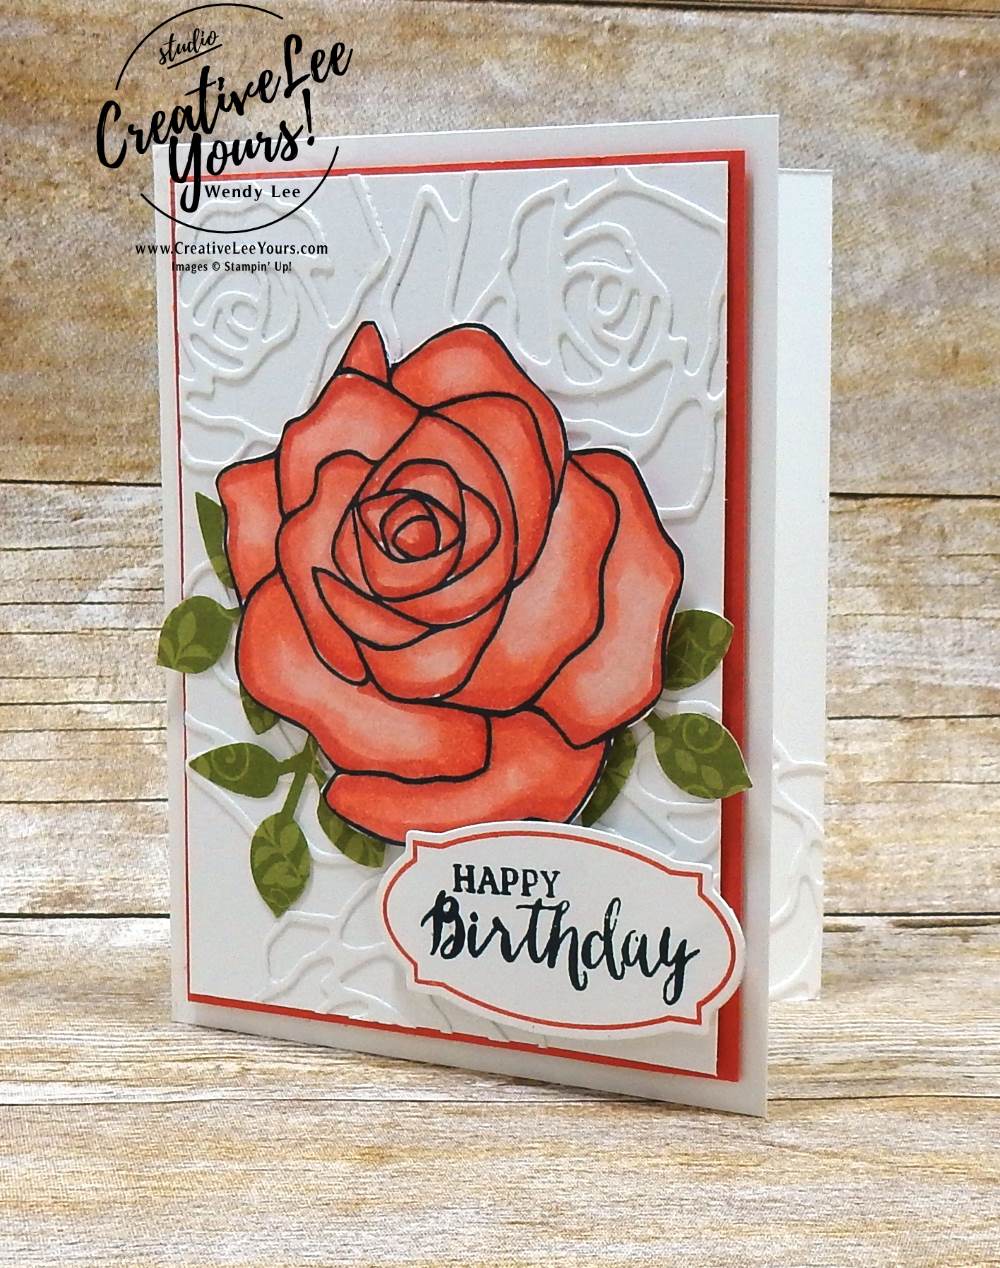 Birthday Flower by Wendy Lee,stampin up, #creativeleeyours, stamping, handmade,stampin blends, rose wonder, watercolor,kylie bertucci international highlights